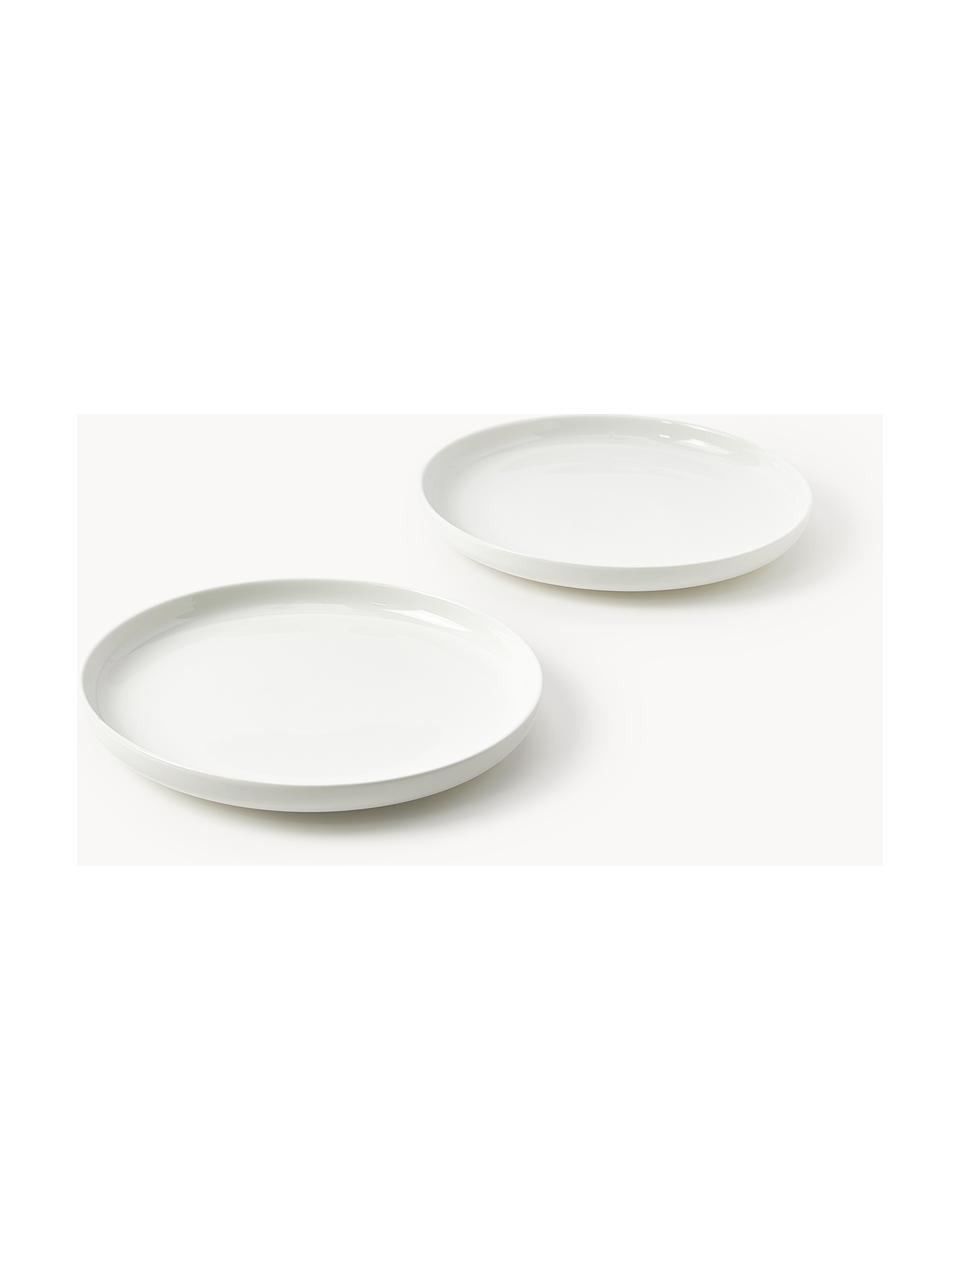 Piatti piani in porcellana Nessa 4 pz, Porcellana a pasta dura di alta qualità smaltata, Bianco latte lucido, Ø 26 cm